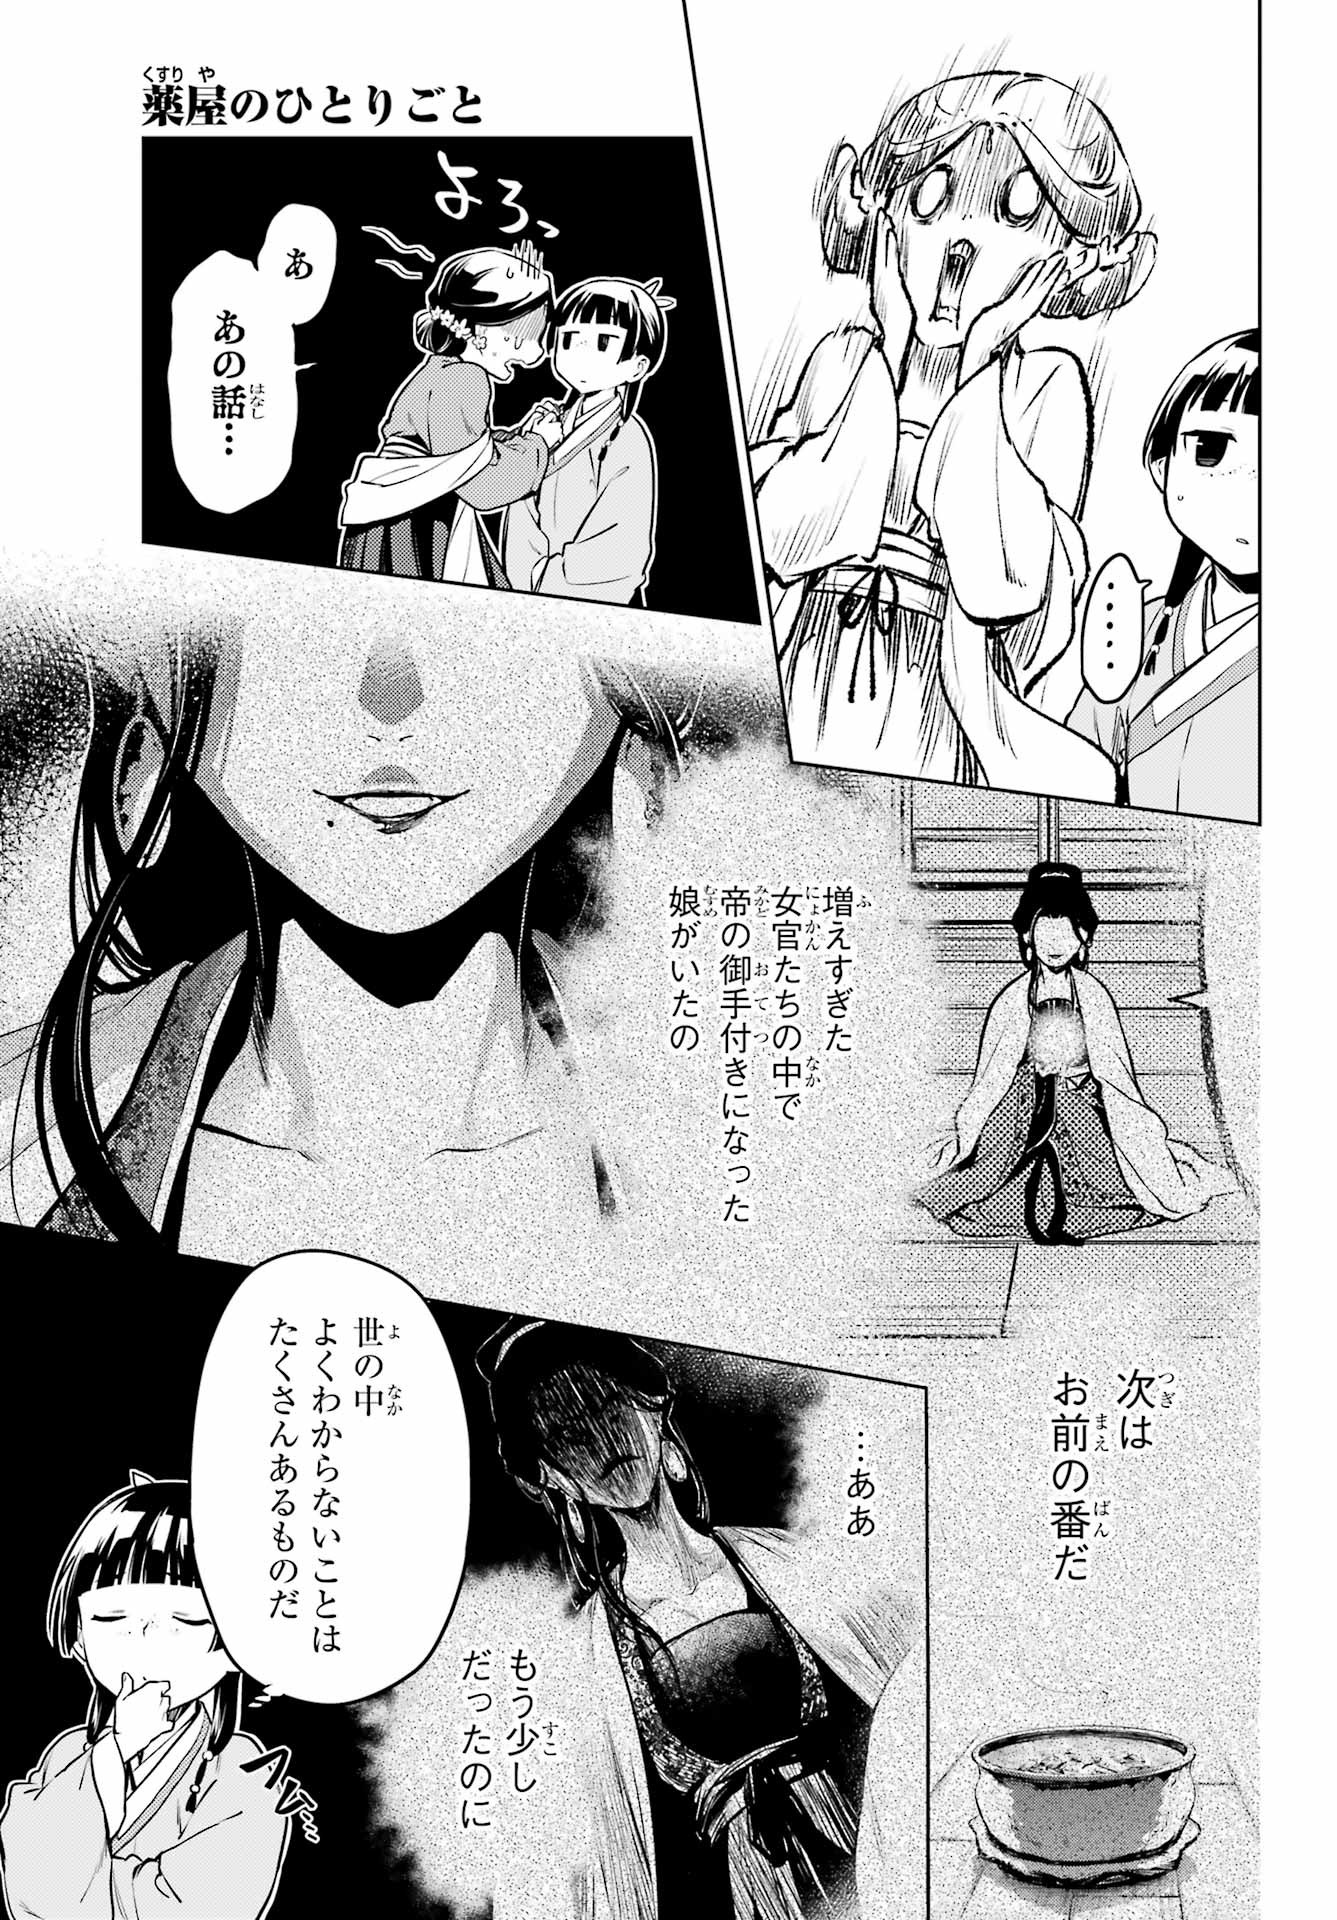 Kusuriya no Hitorigoto - Chapter 59-2 - Page 24